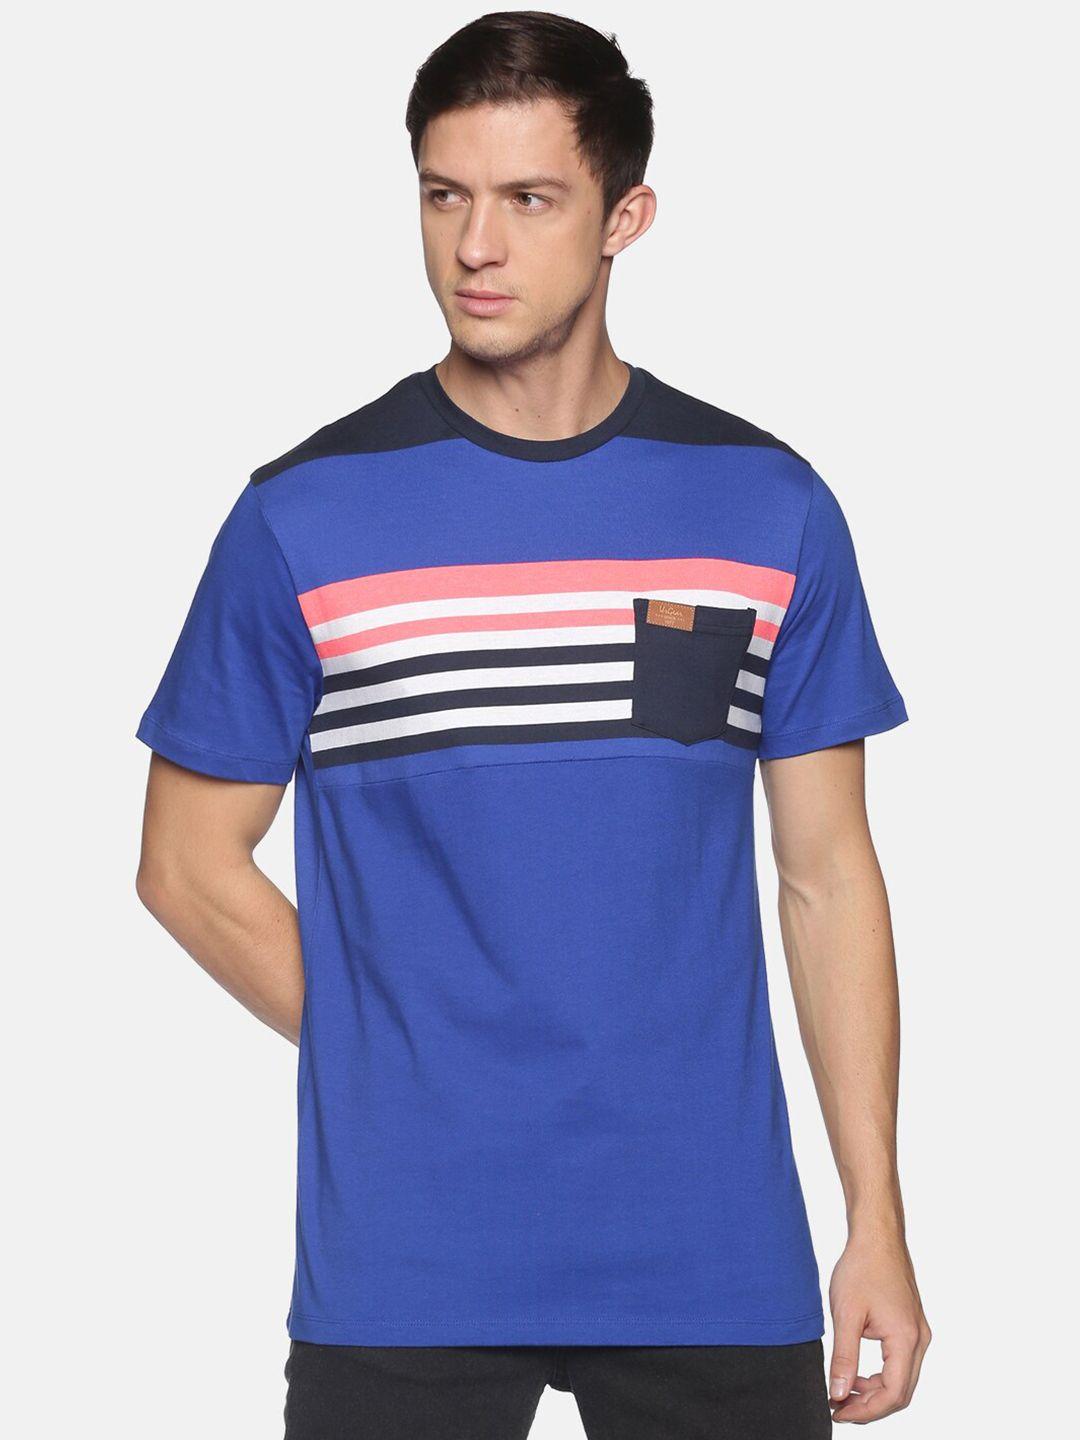 urgear-men-blue-&-pink-striped-pockets-t-shirt